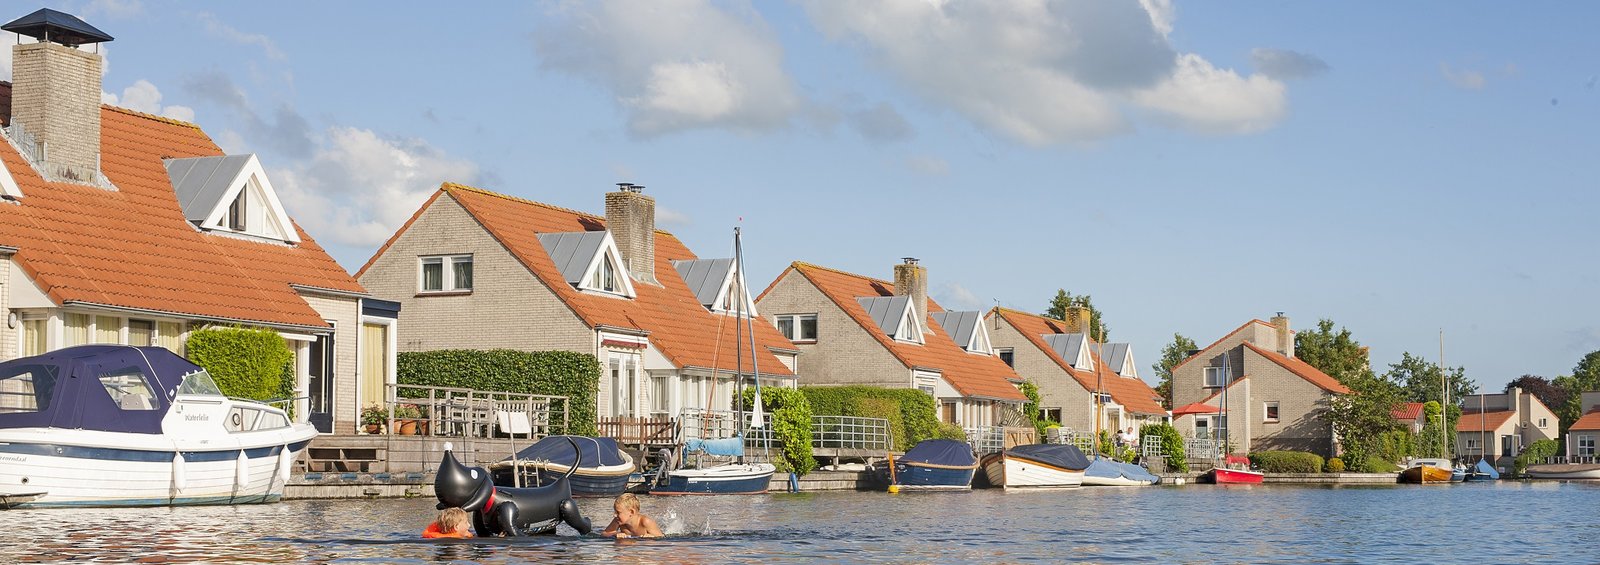 Ferienhaus am Wasser in Holland mieten | Villapark ...